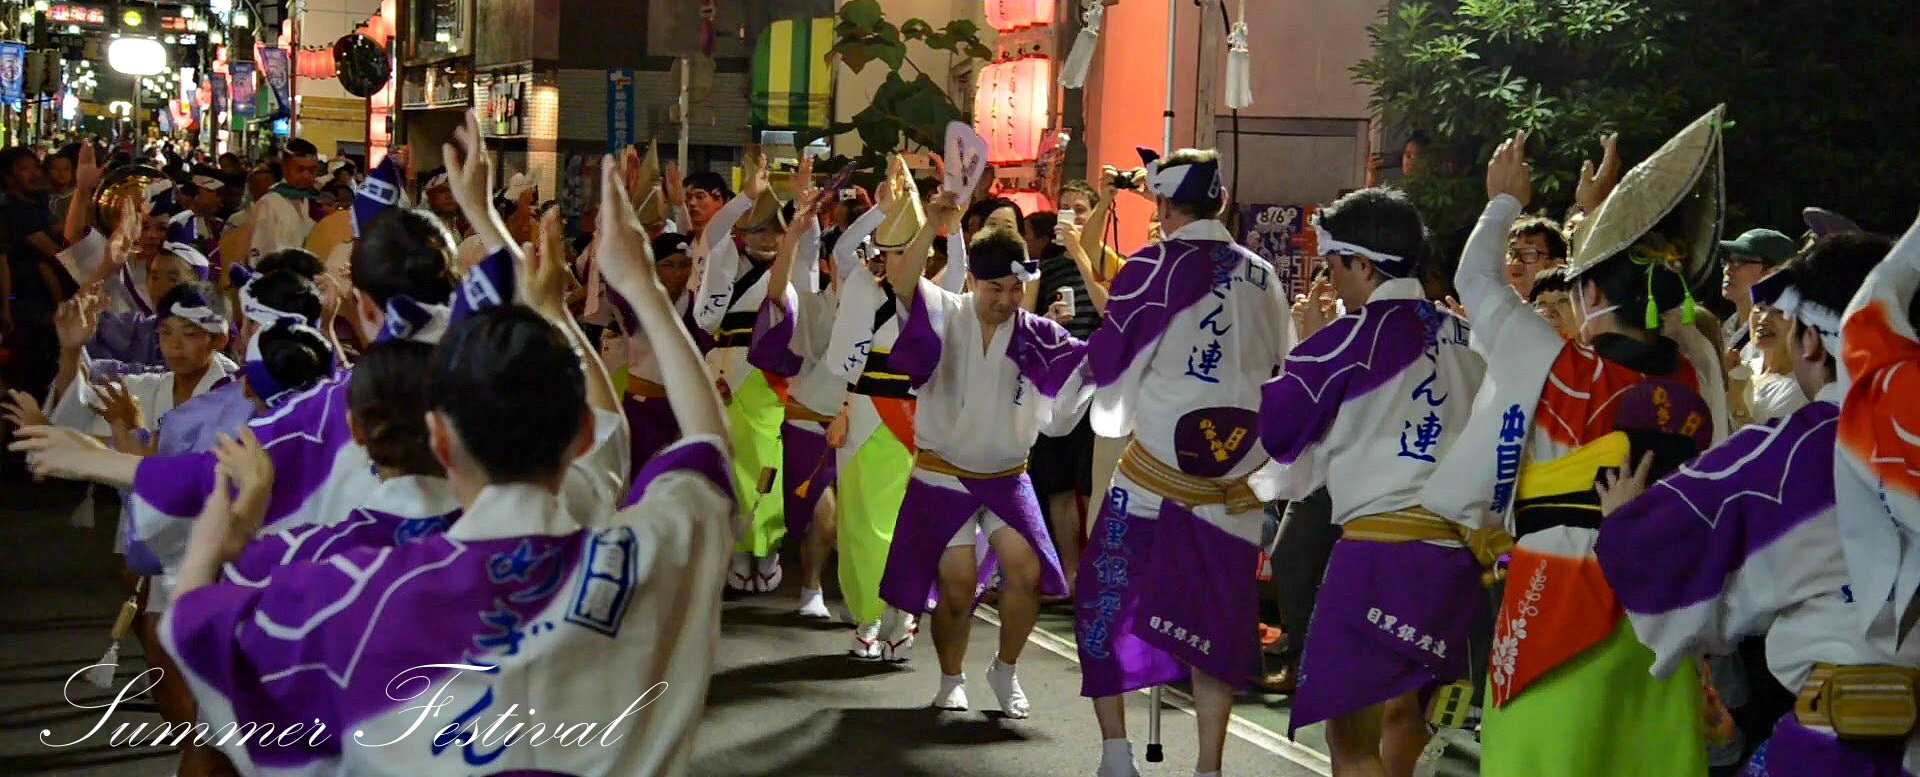 Nakameguro Festival